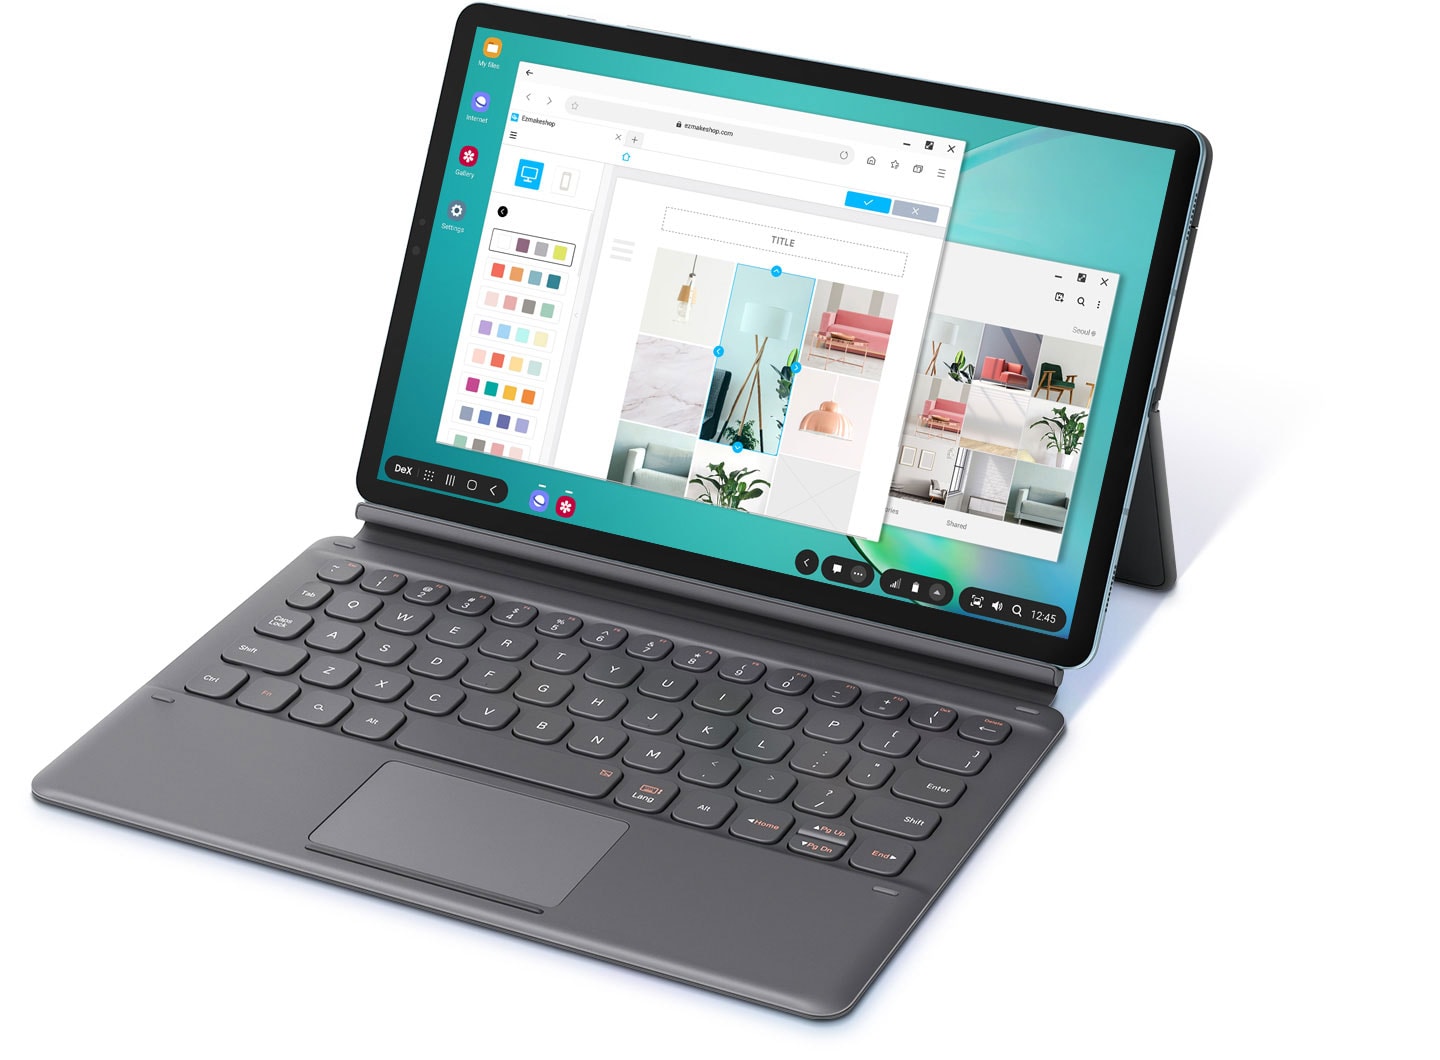 Samsung Galaxy Tab S6 Keyboard Alternatives What You Should Know